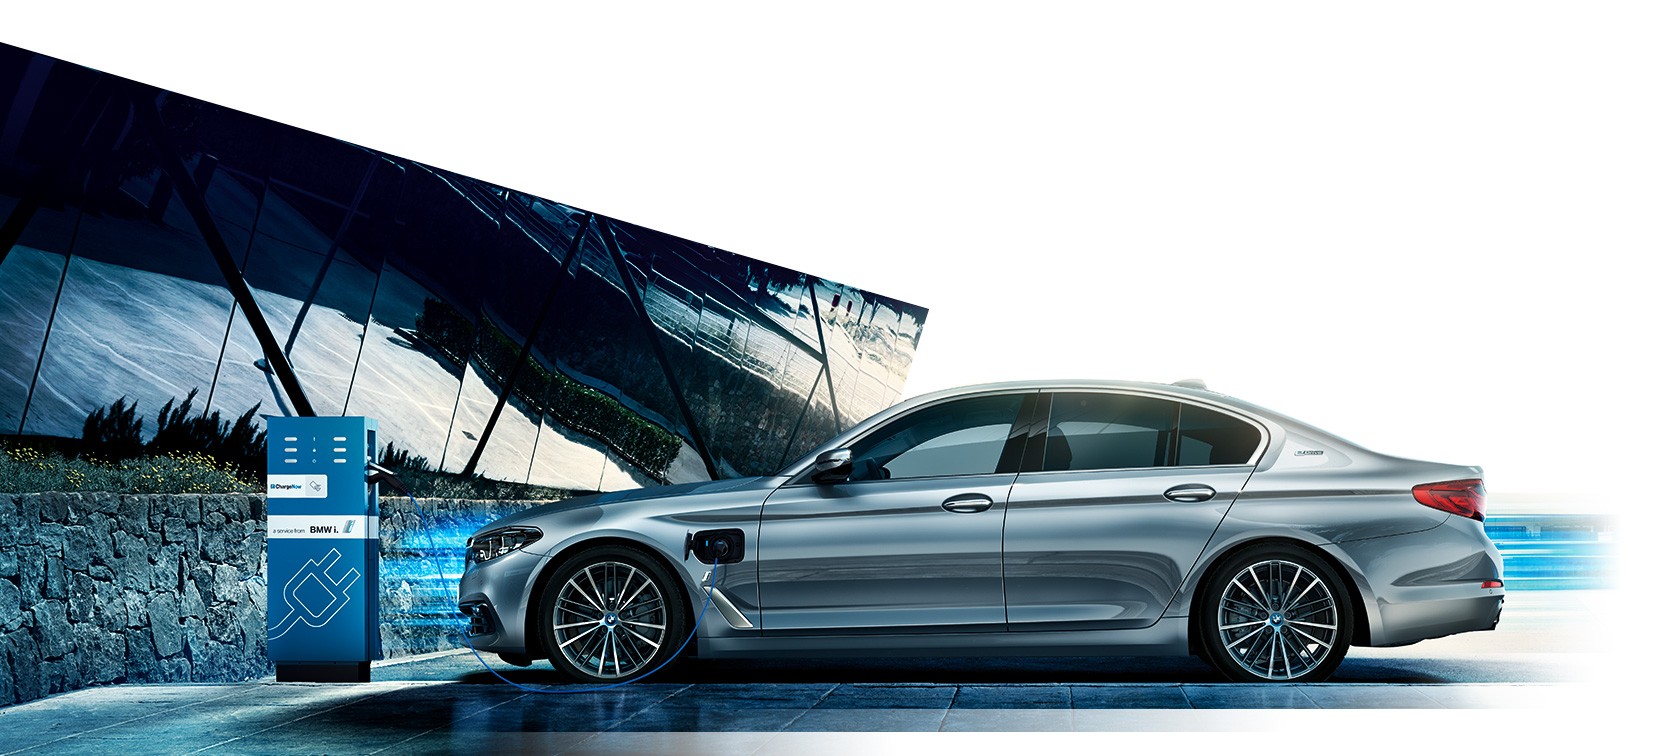 Yeni BMW 5 Serisi Sedan i Performance